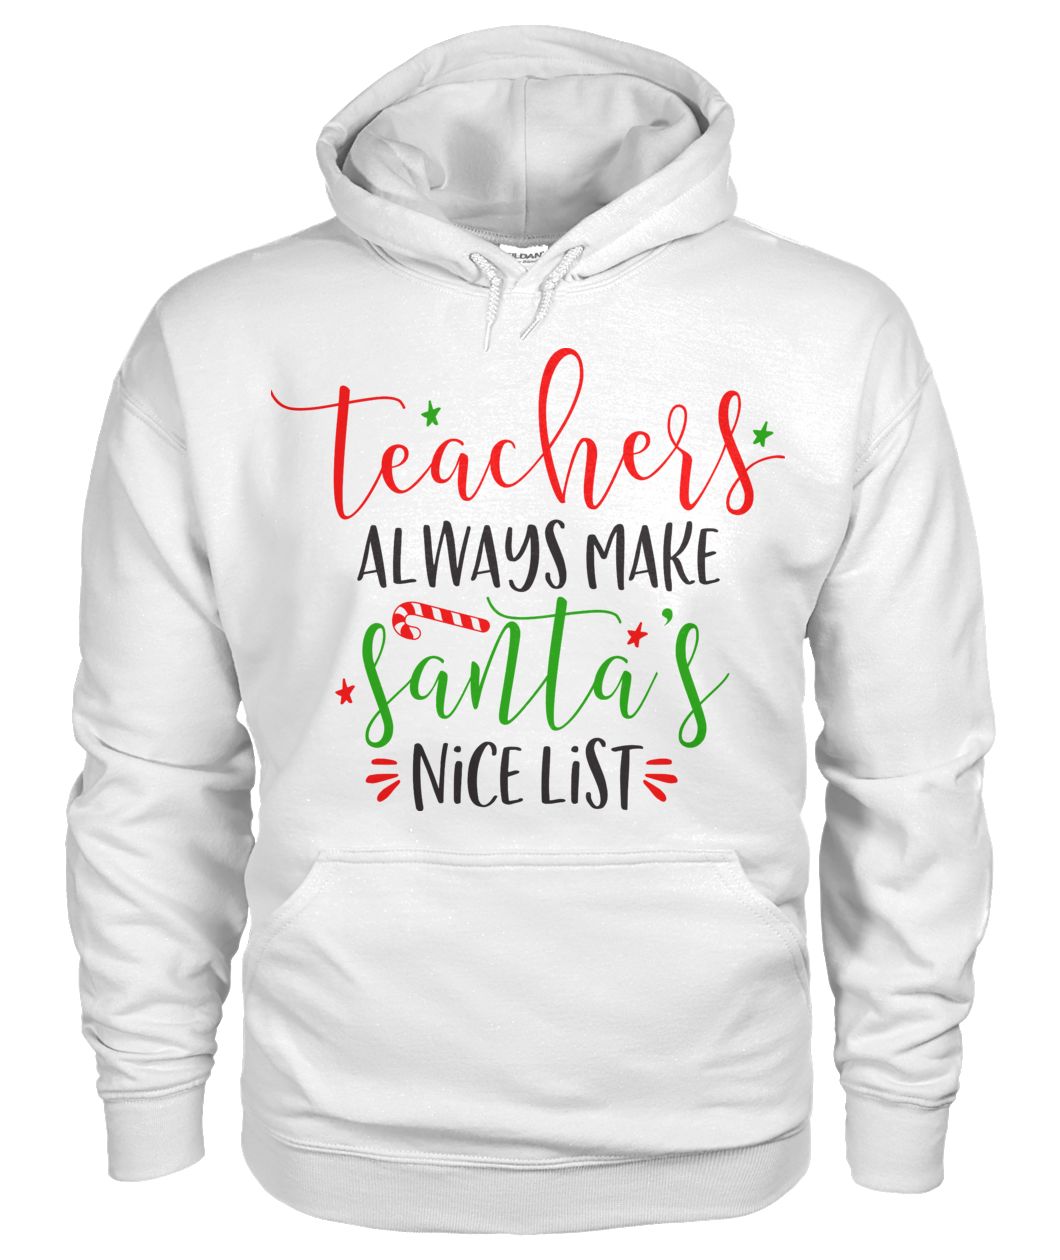 "Teachers Always Make Santa's Nice List" Hoodie